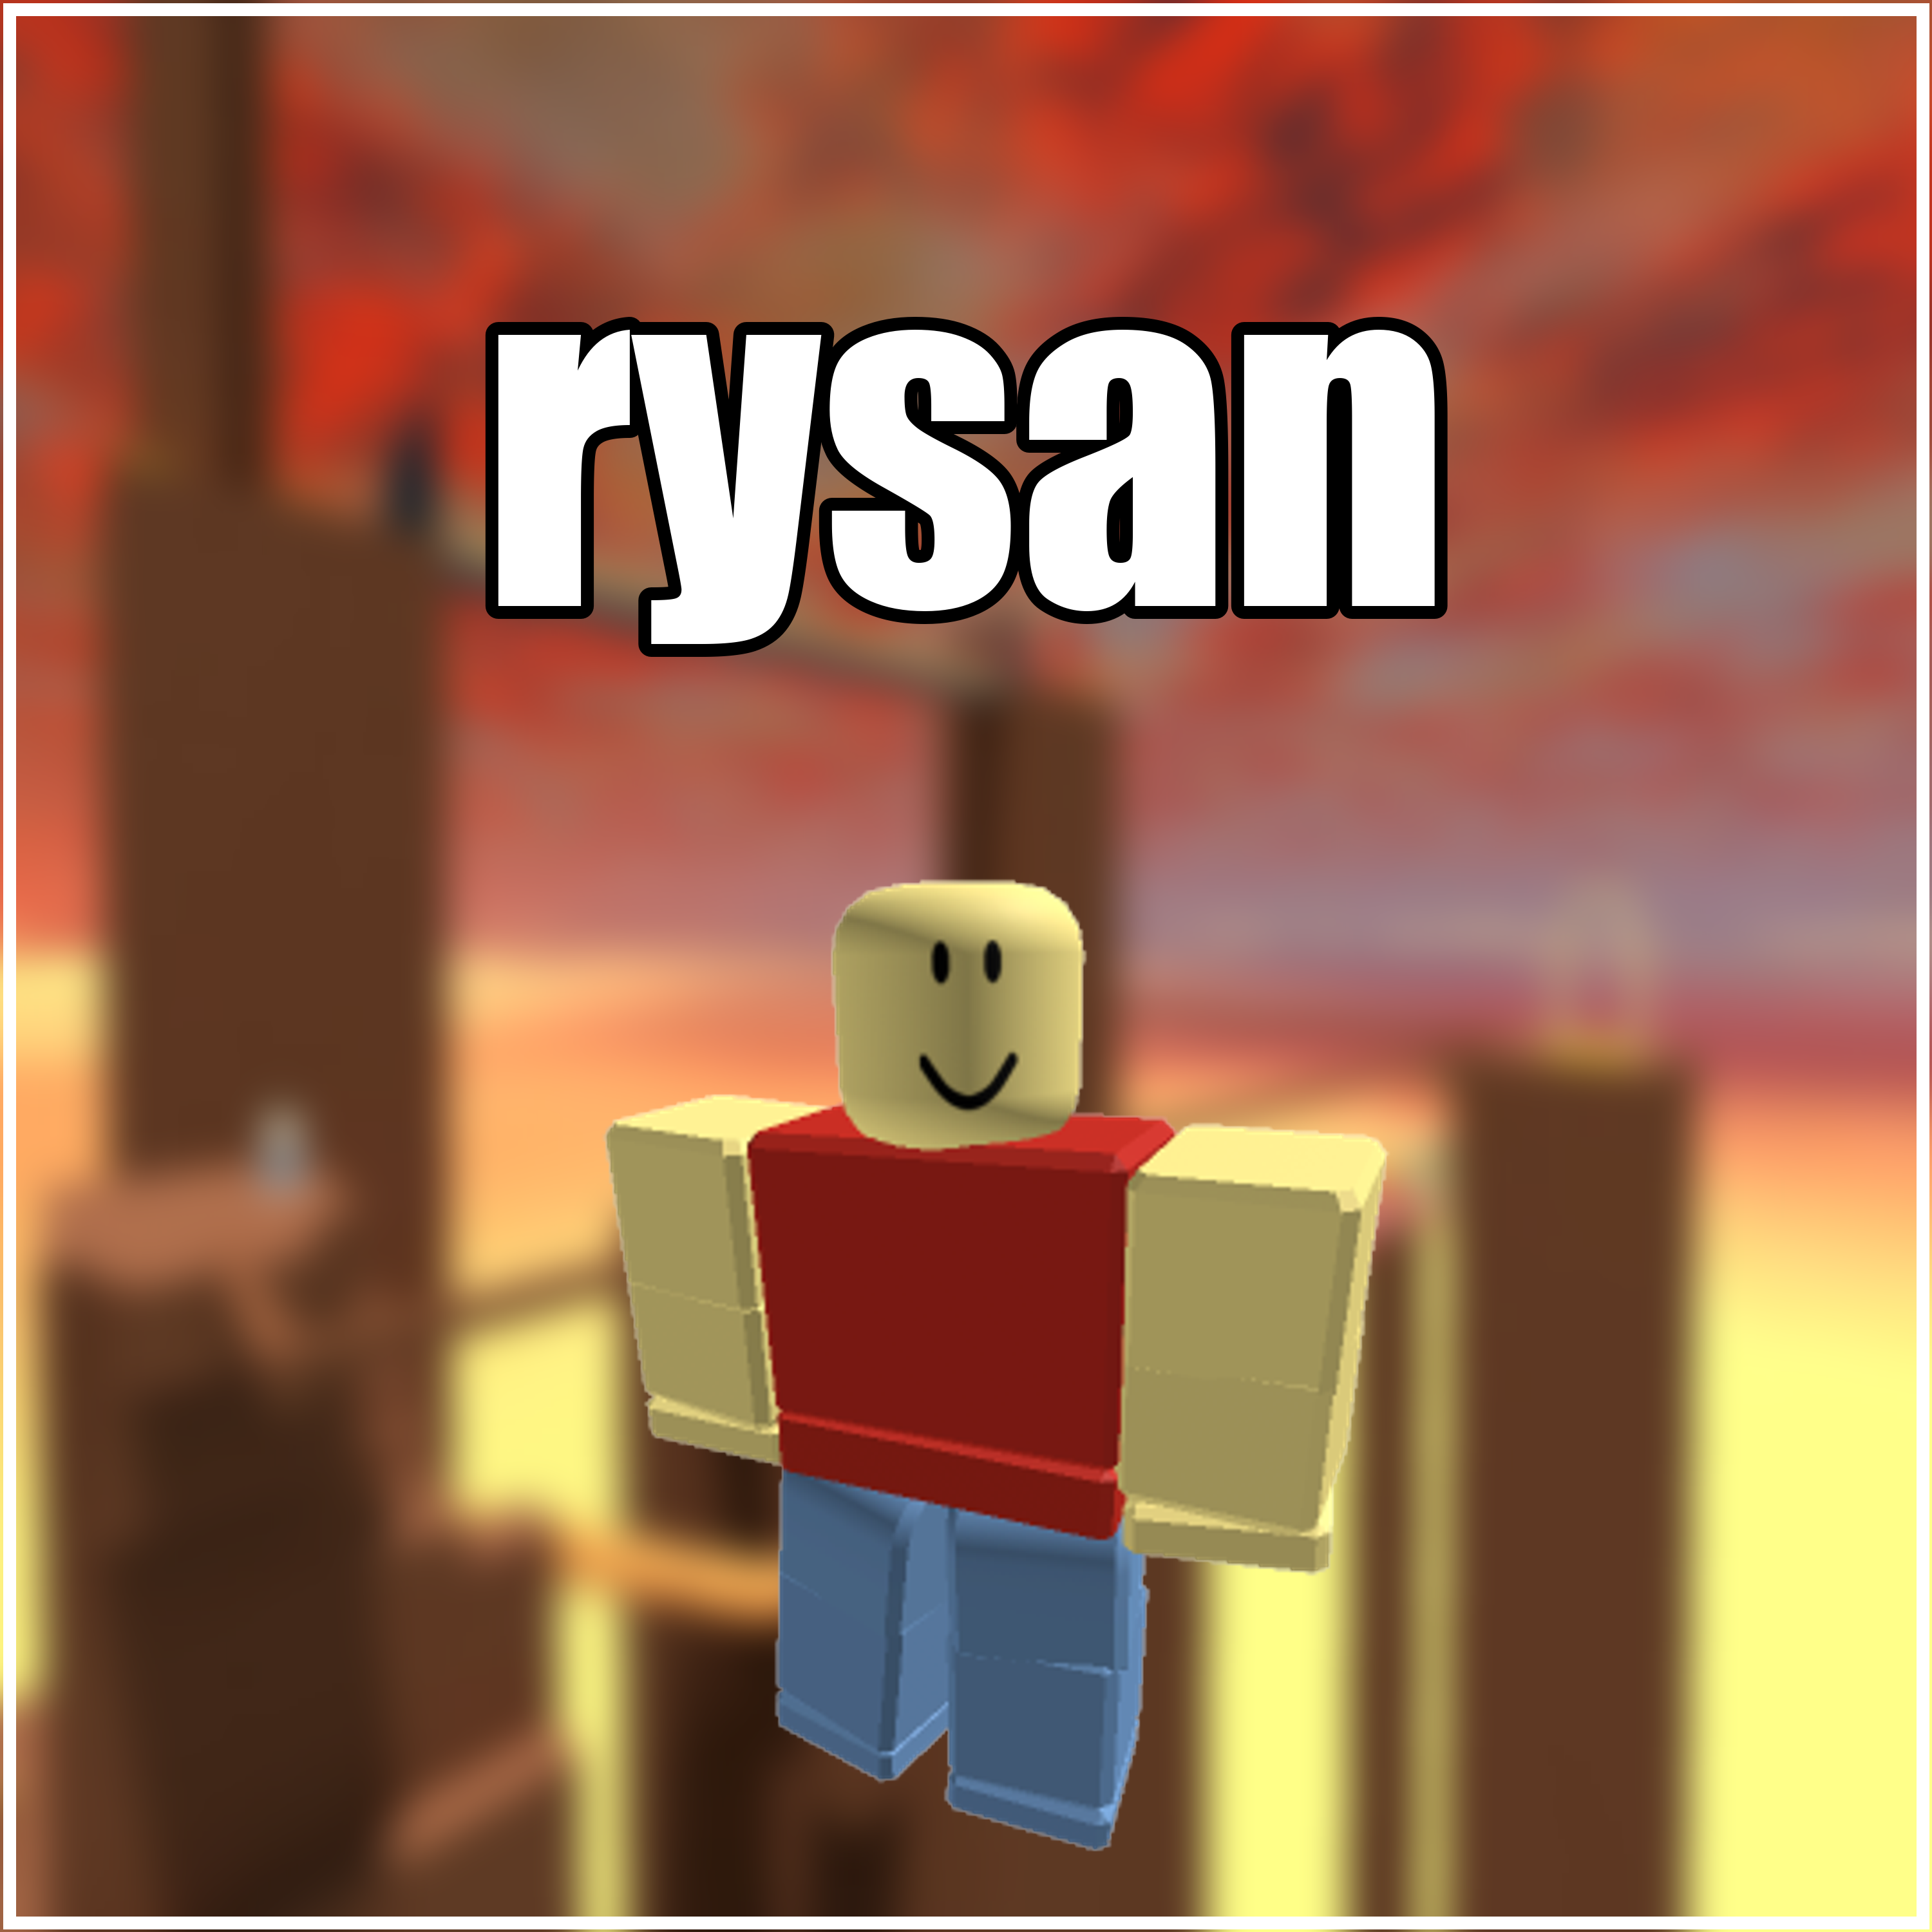 robruh RARE username "rysan" ROBLOX account guaranteed to be unverified!